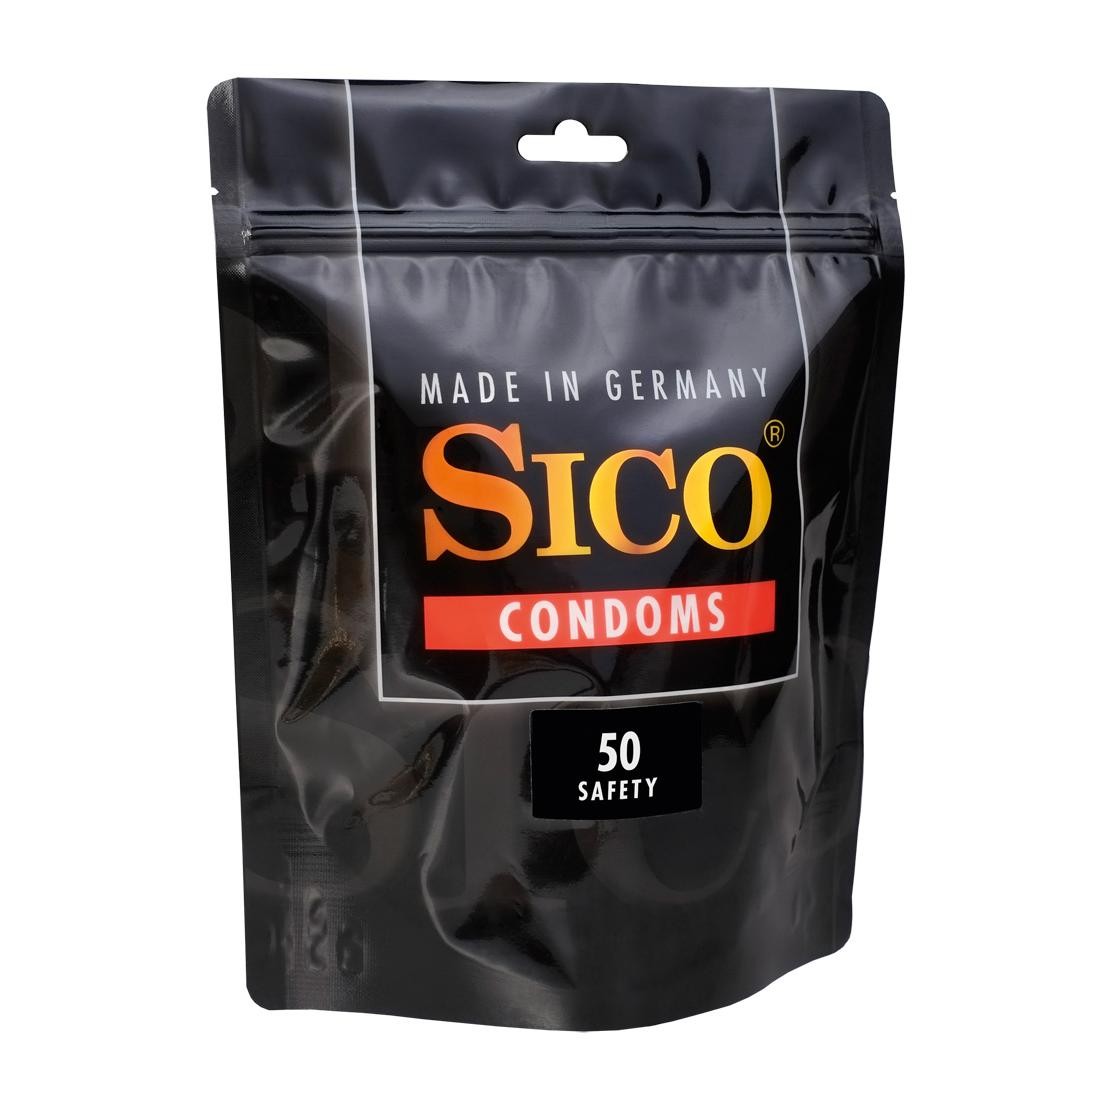  SICO  60  -  50er  Beutel  Kondome 